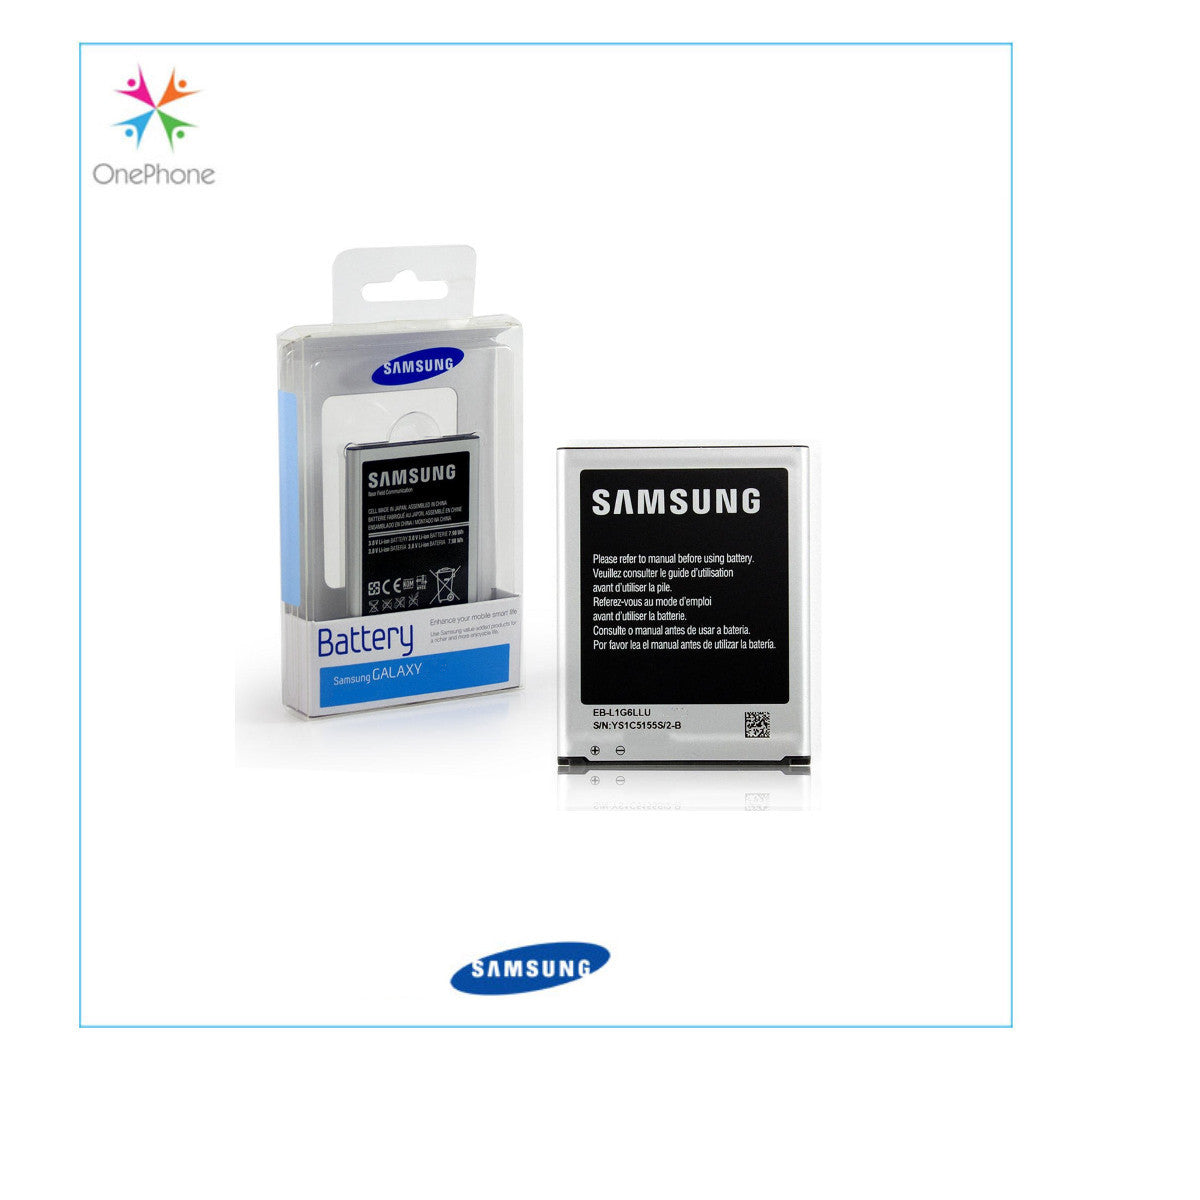 Samsung Galaxy S3 Mini Battery